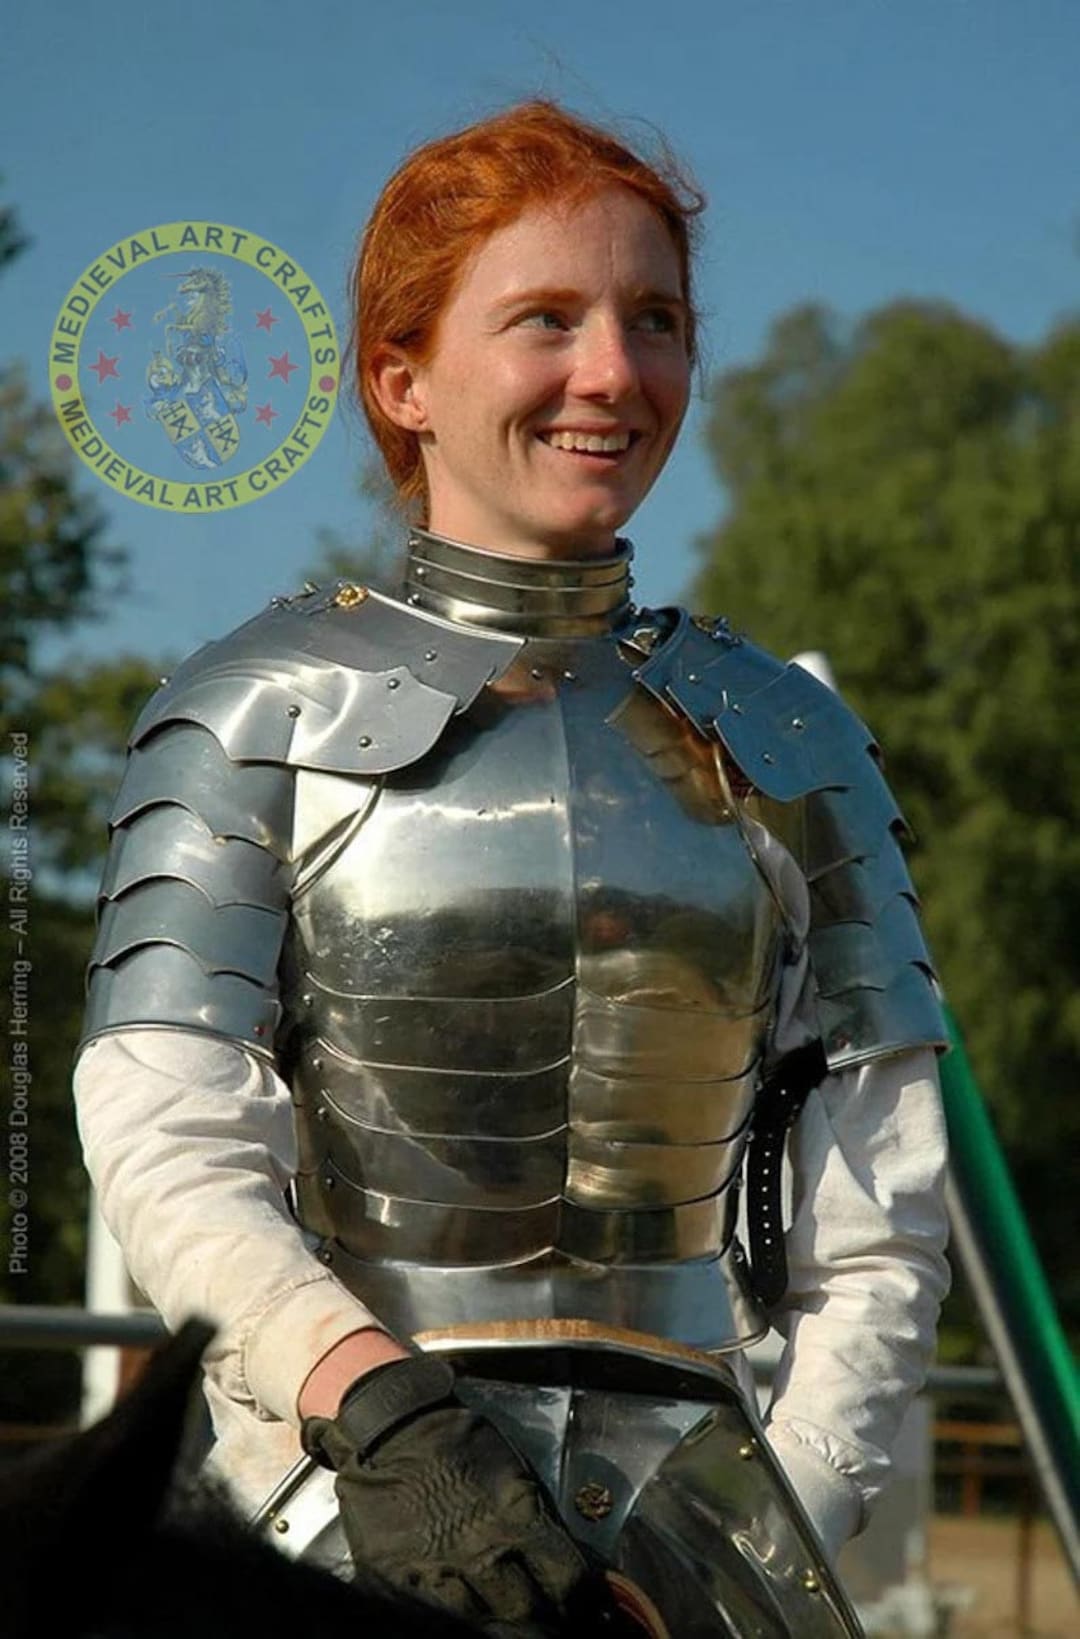 Female Fantasy Armor Costume, Ancient Lady Bra Armor, Cosplay, Larp,  Halloween Gift -  Norway